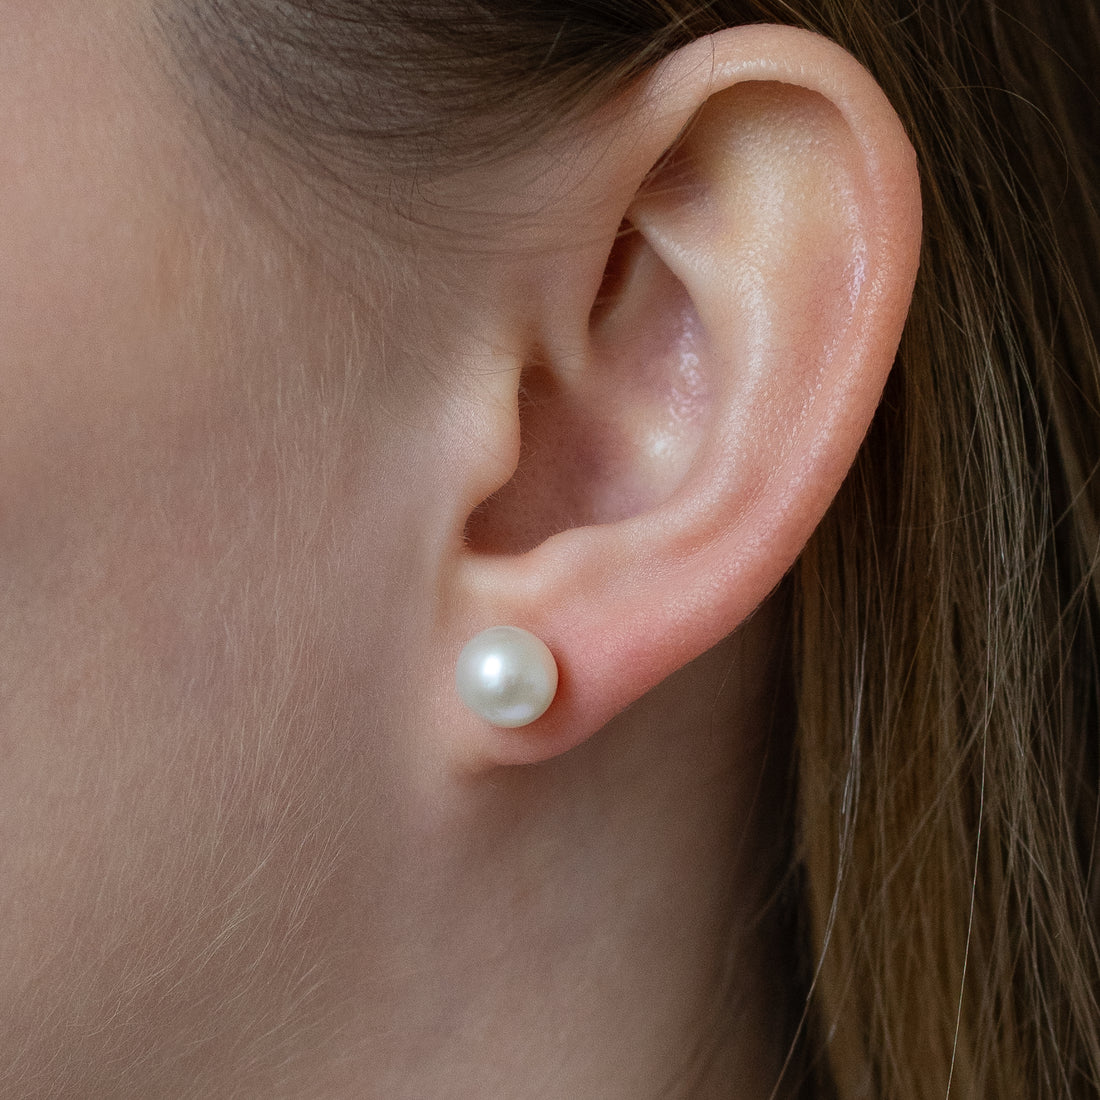 8mm Pearl Earrings